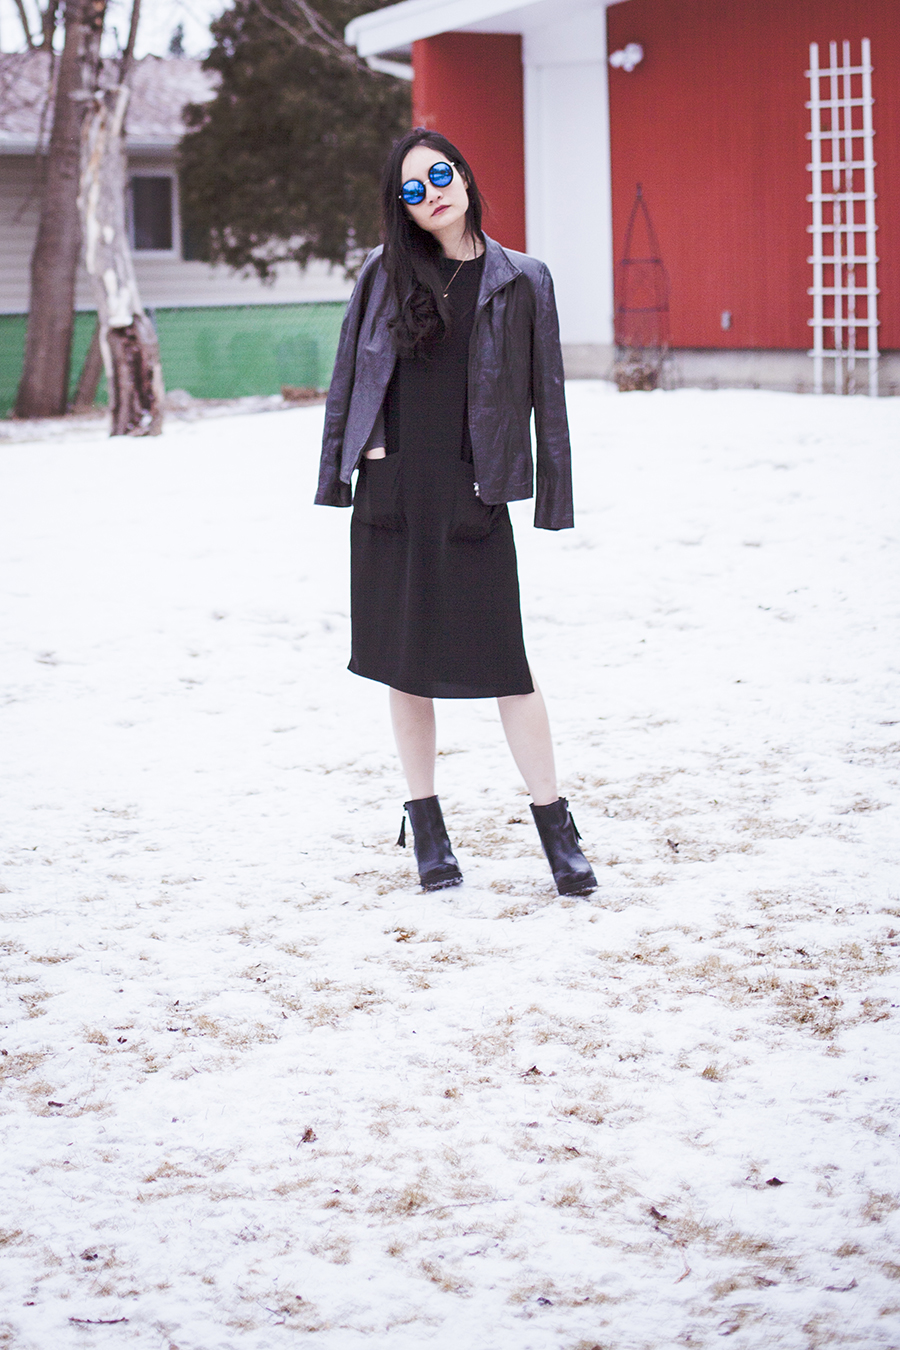 Monochrome winter outfit: P.Rossa black leather jacket, Forever 21 black dress, DealSale amethyst necklace, Uniqlo Heattech top, Steve Madden black tassel heel boots, CNDirect blue sunglasses.